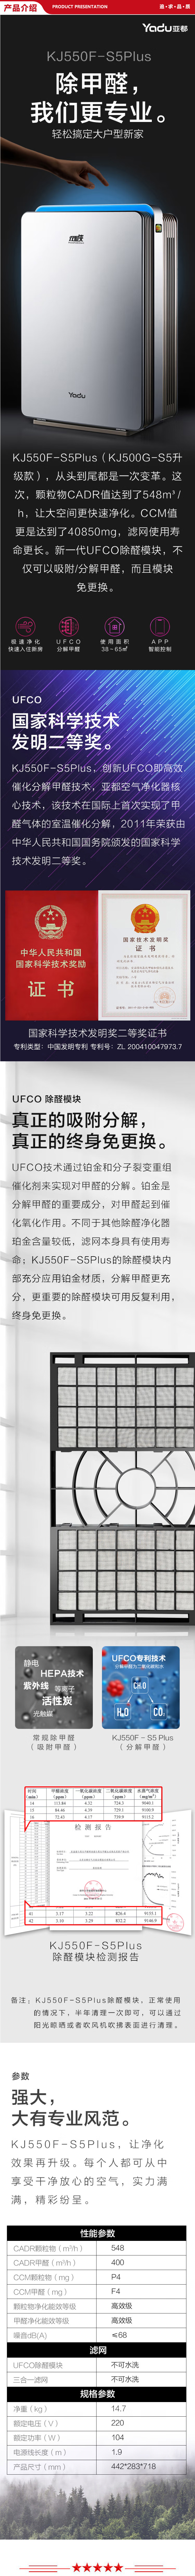 KJ550F-S5Plus-.jpg